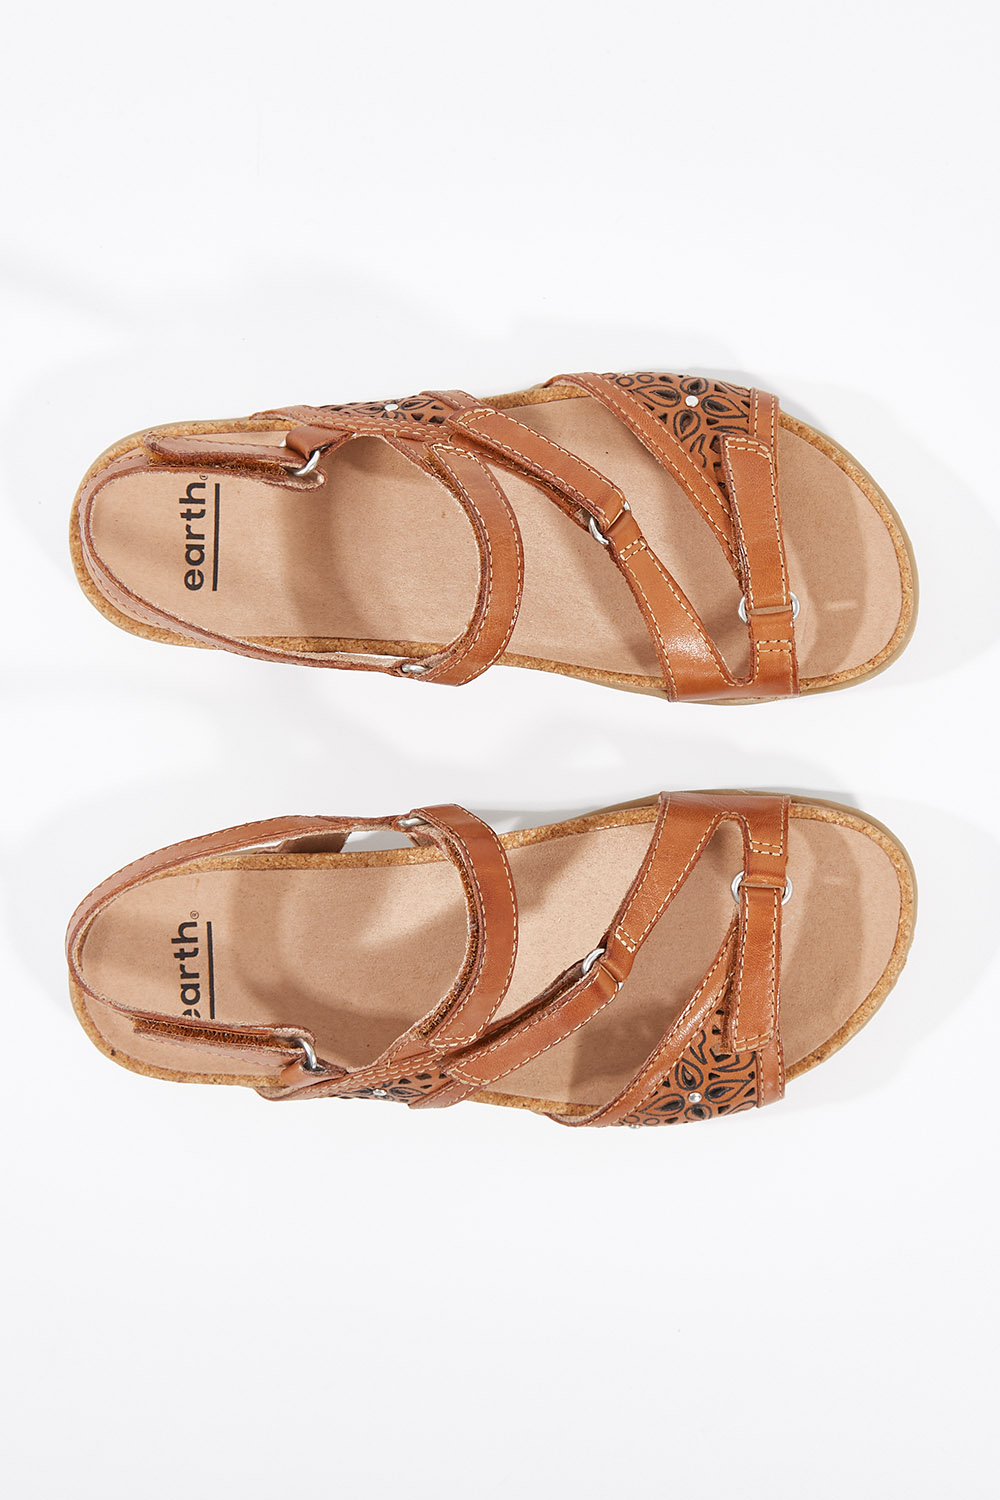 Earth Shoes Maui Sandal - Womens Flats 